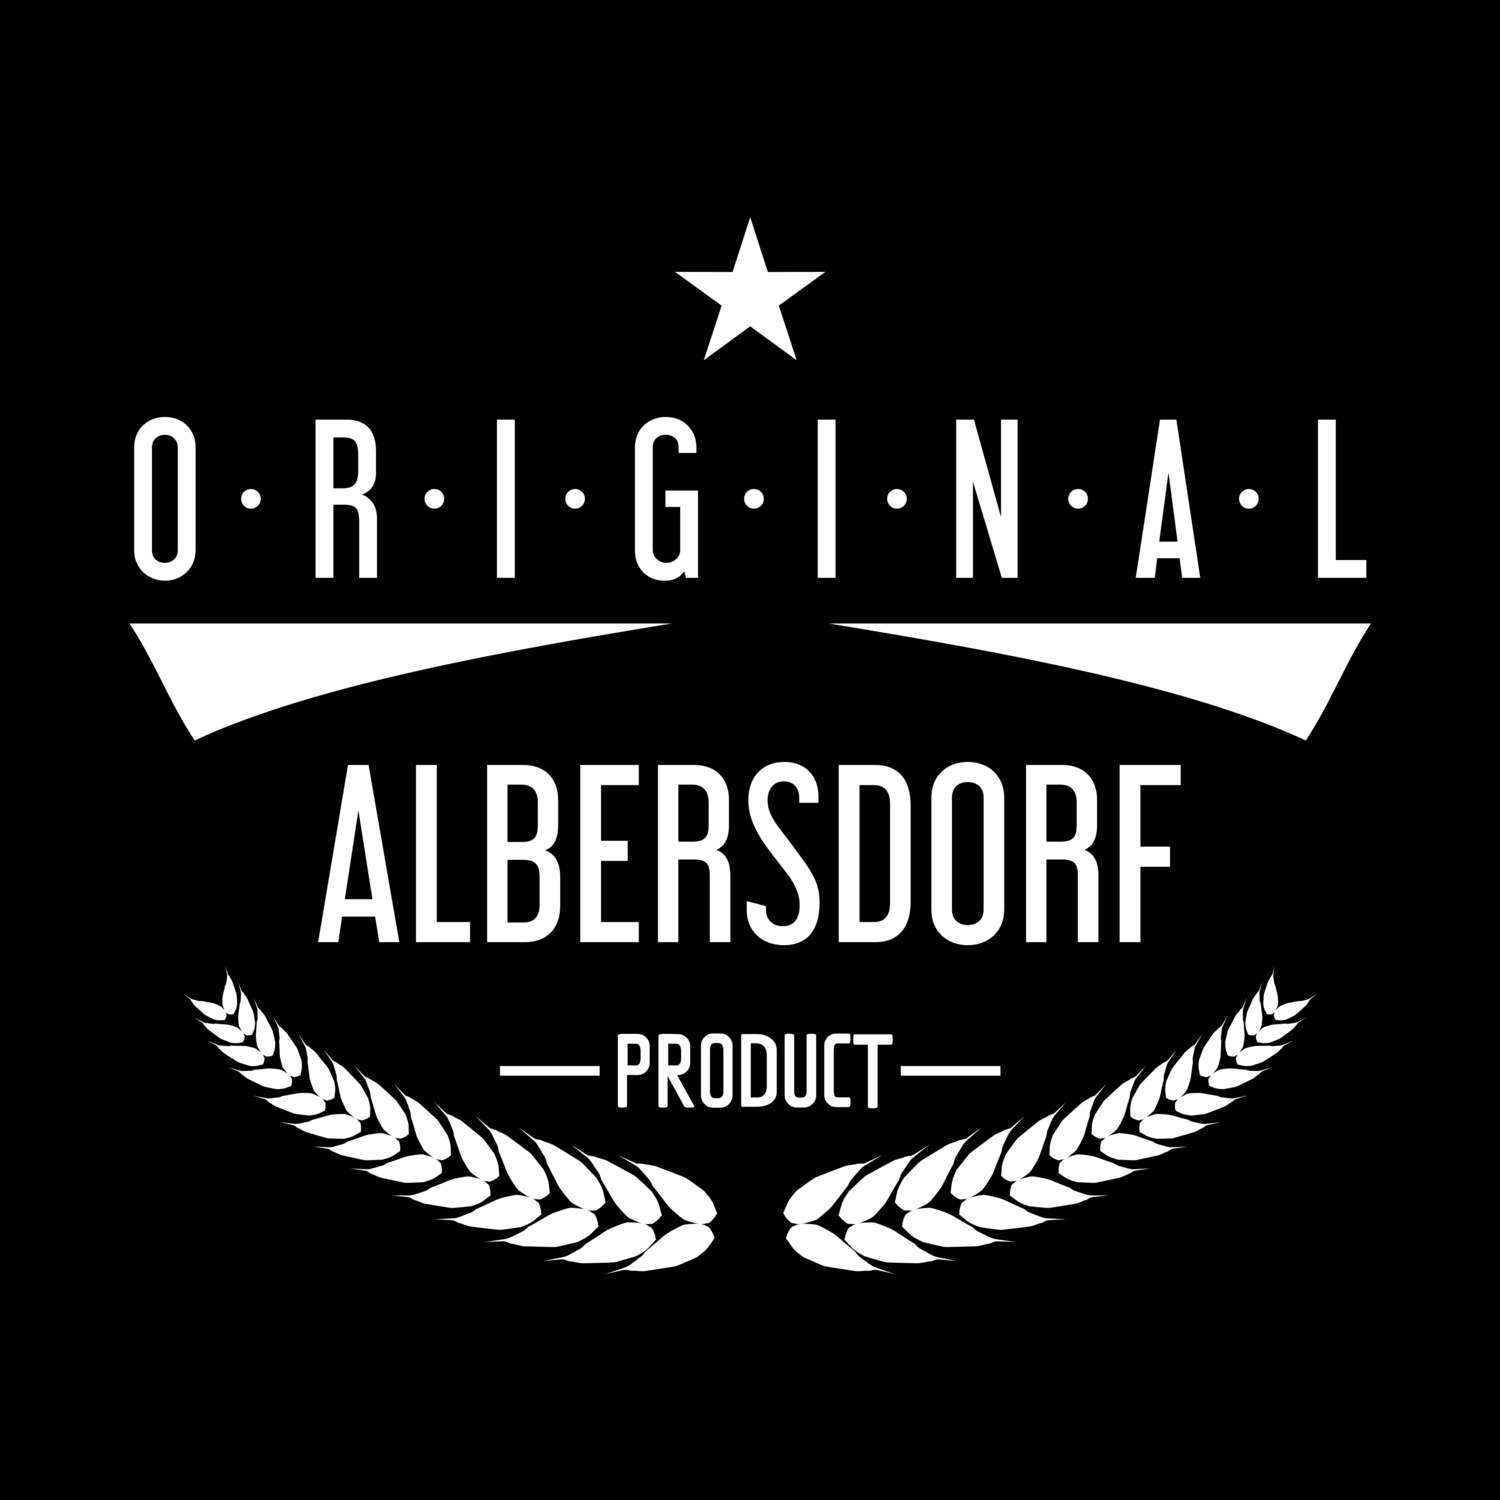 Albersdorf T-Shirt »Original Product«